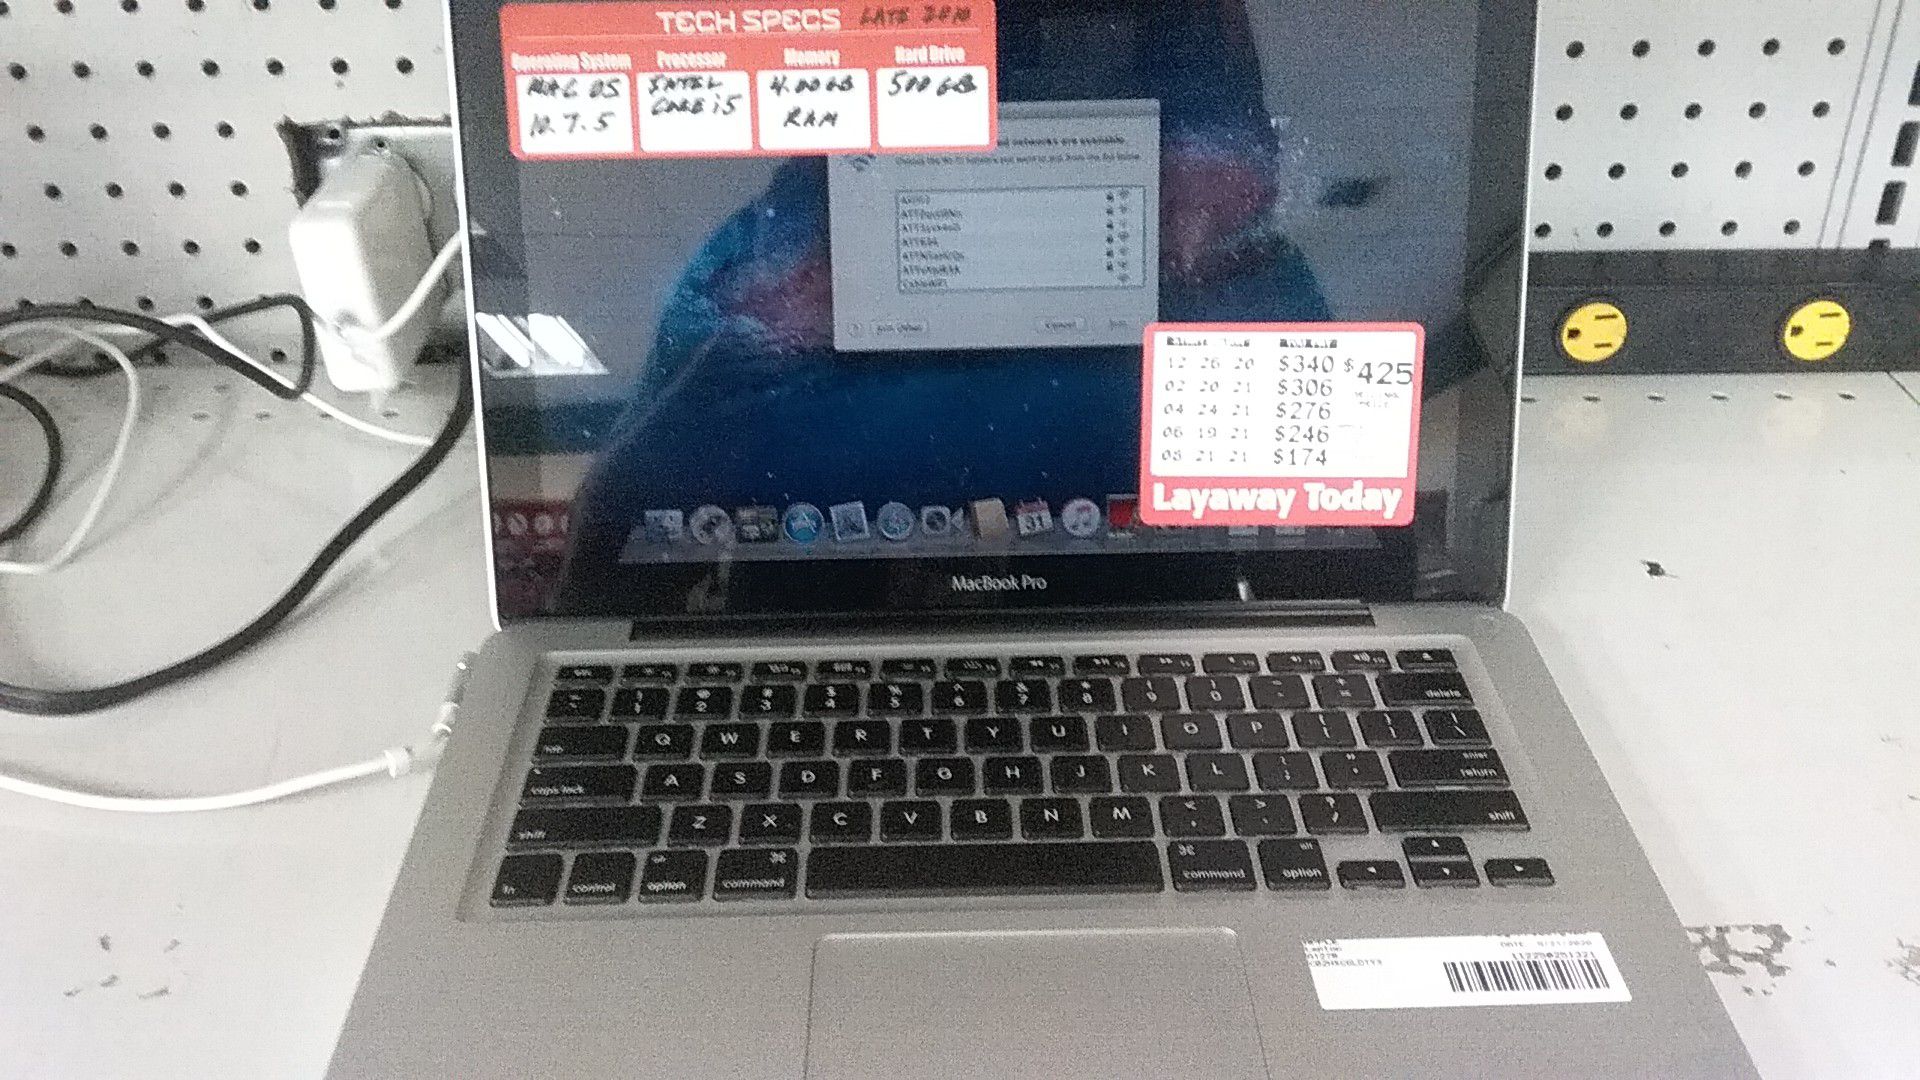 Apple macbook pro laptop a1278 late 2010 model